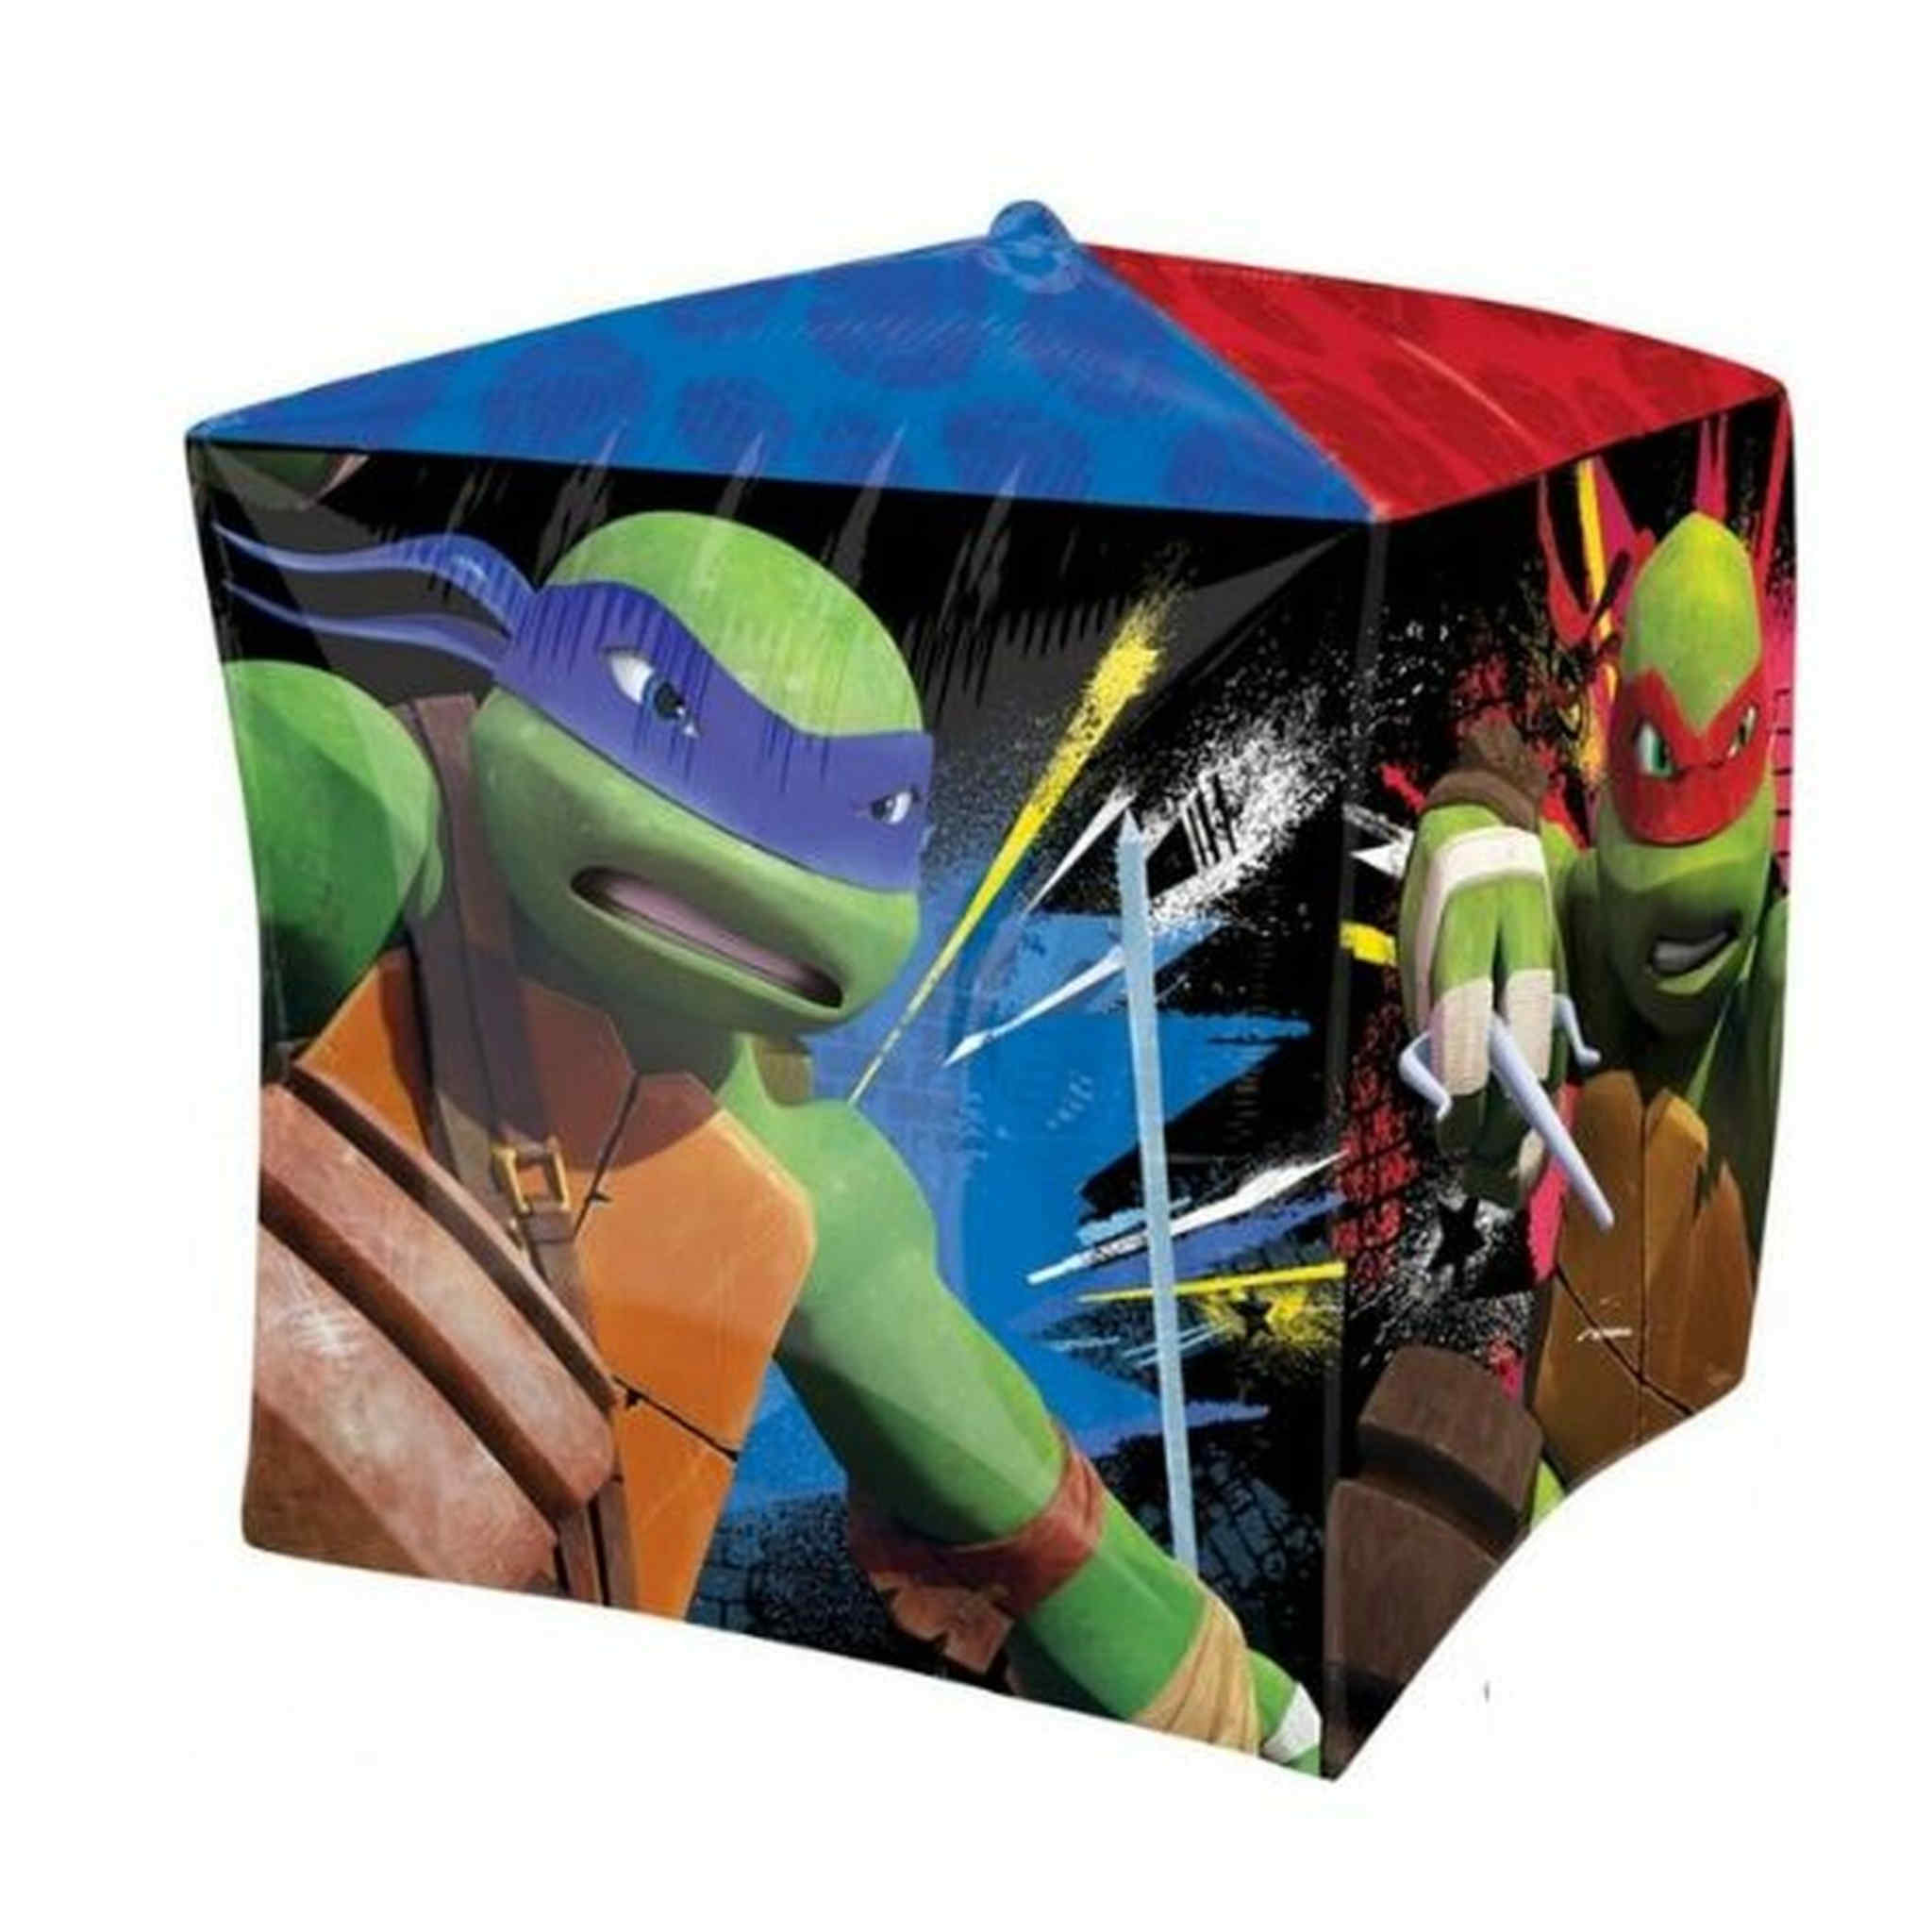 Teenage Mutant Ninja Turtles Cubez Balloon | 15 inch